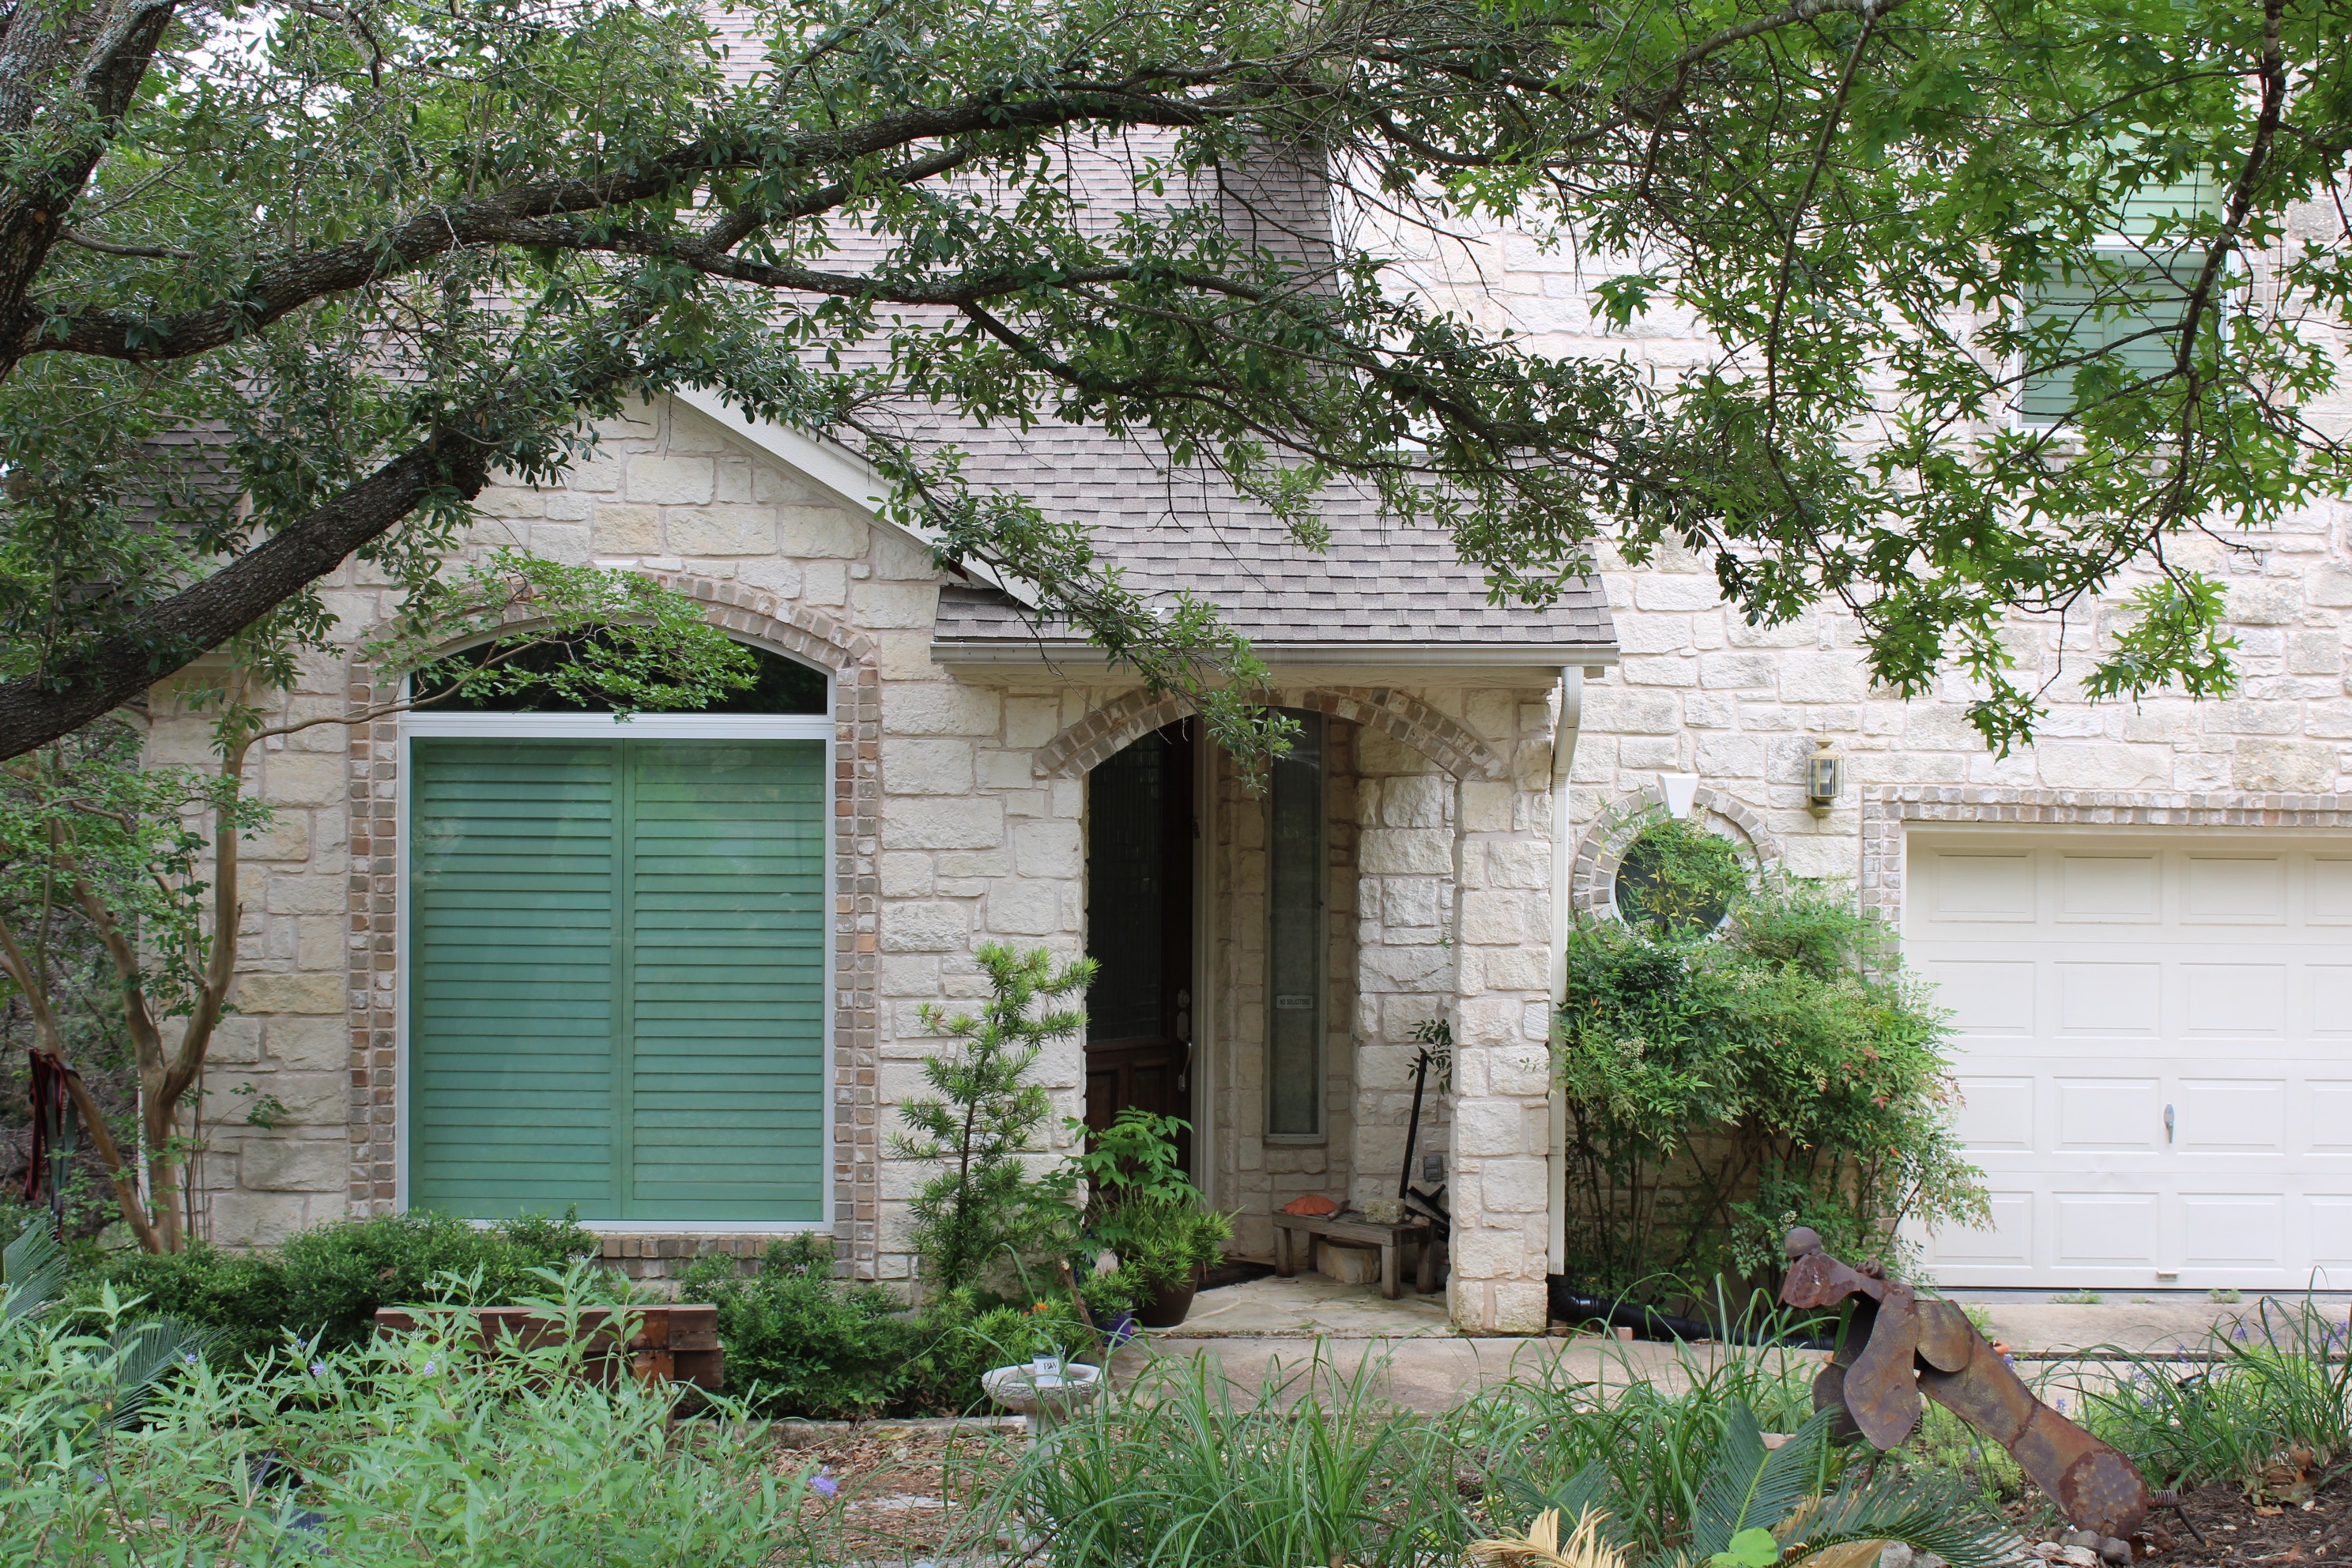 Stone front exterior and garage door of Austin home